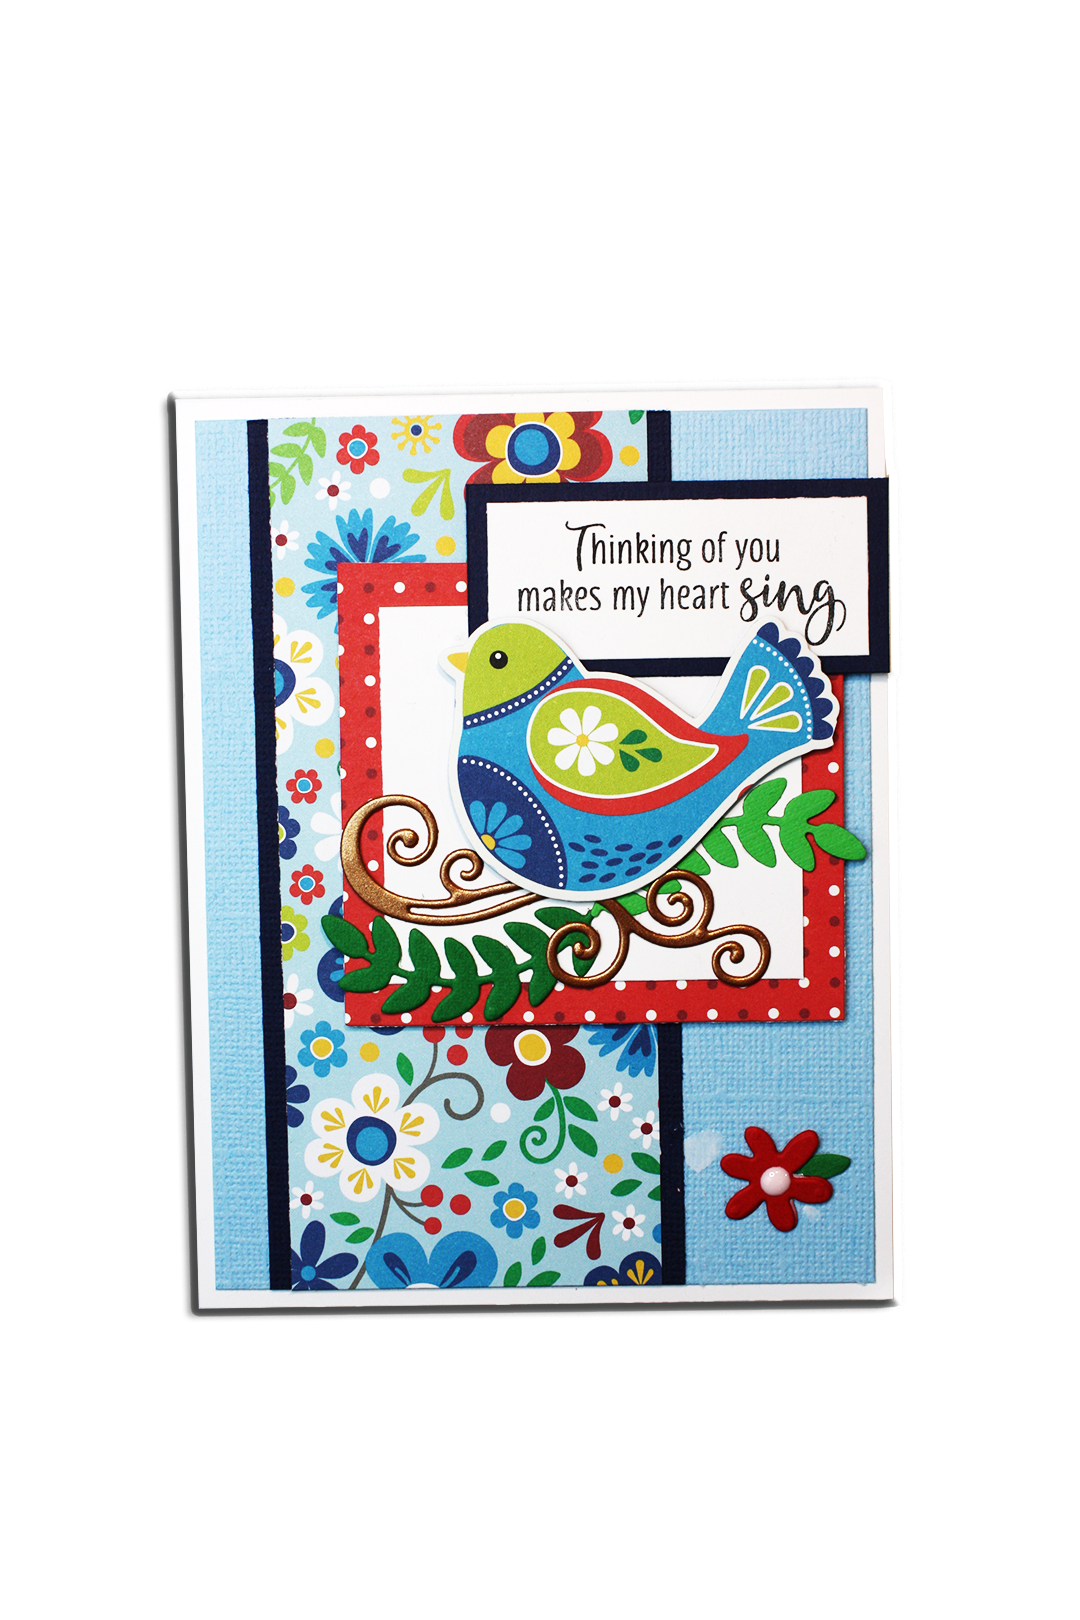 Handmade card using the stamp set, "Joyful Robin" from Dare 2B Artzy.